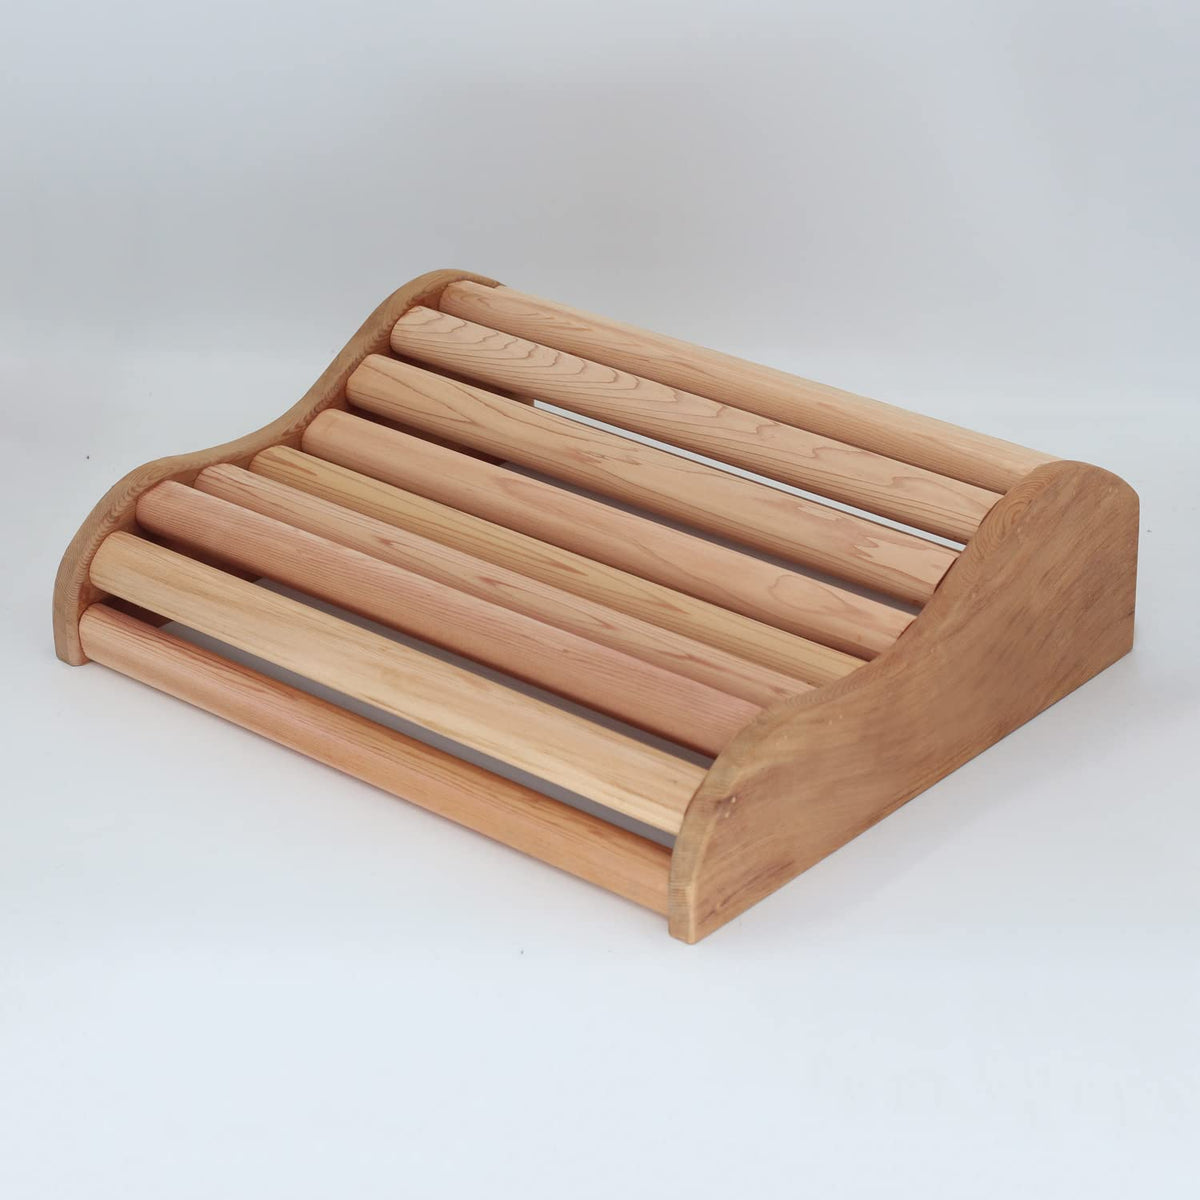 SAUNASNET® Wooden Sauna Headrest for Rejuvenation and Relaxation